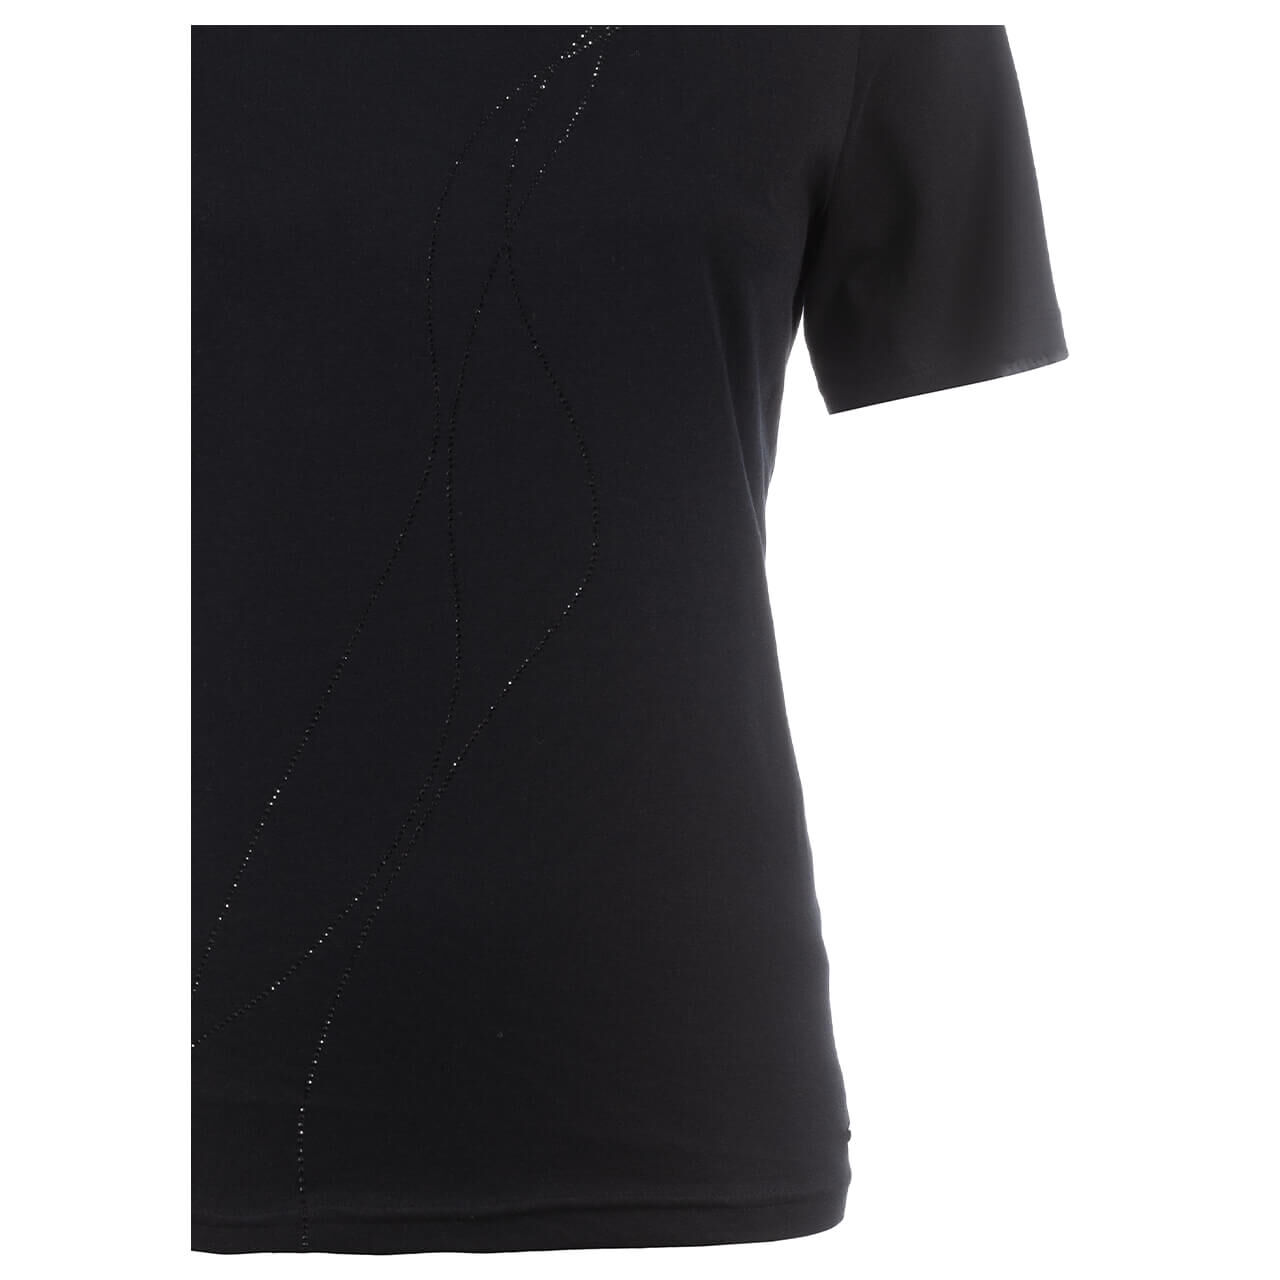 Soquesto Damen T-Shirt elegant black